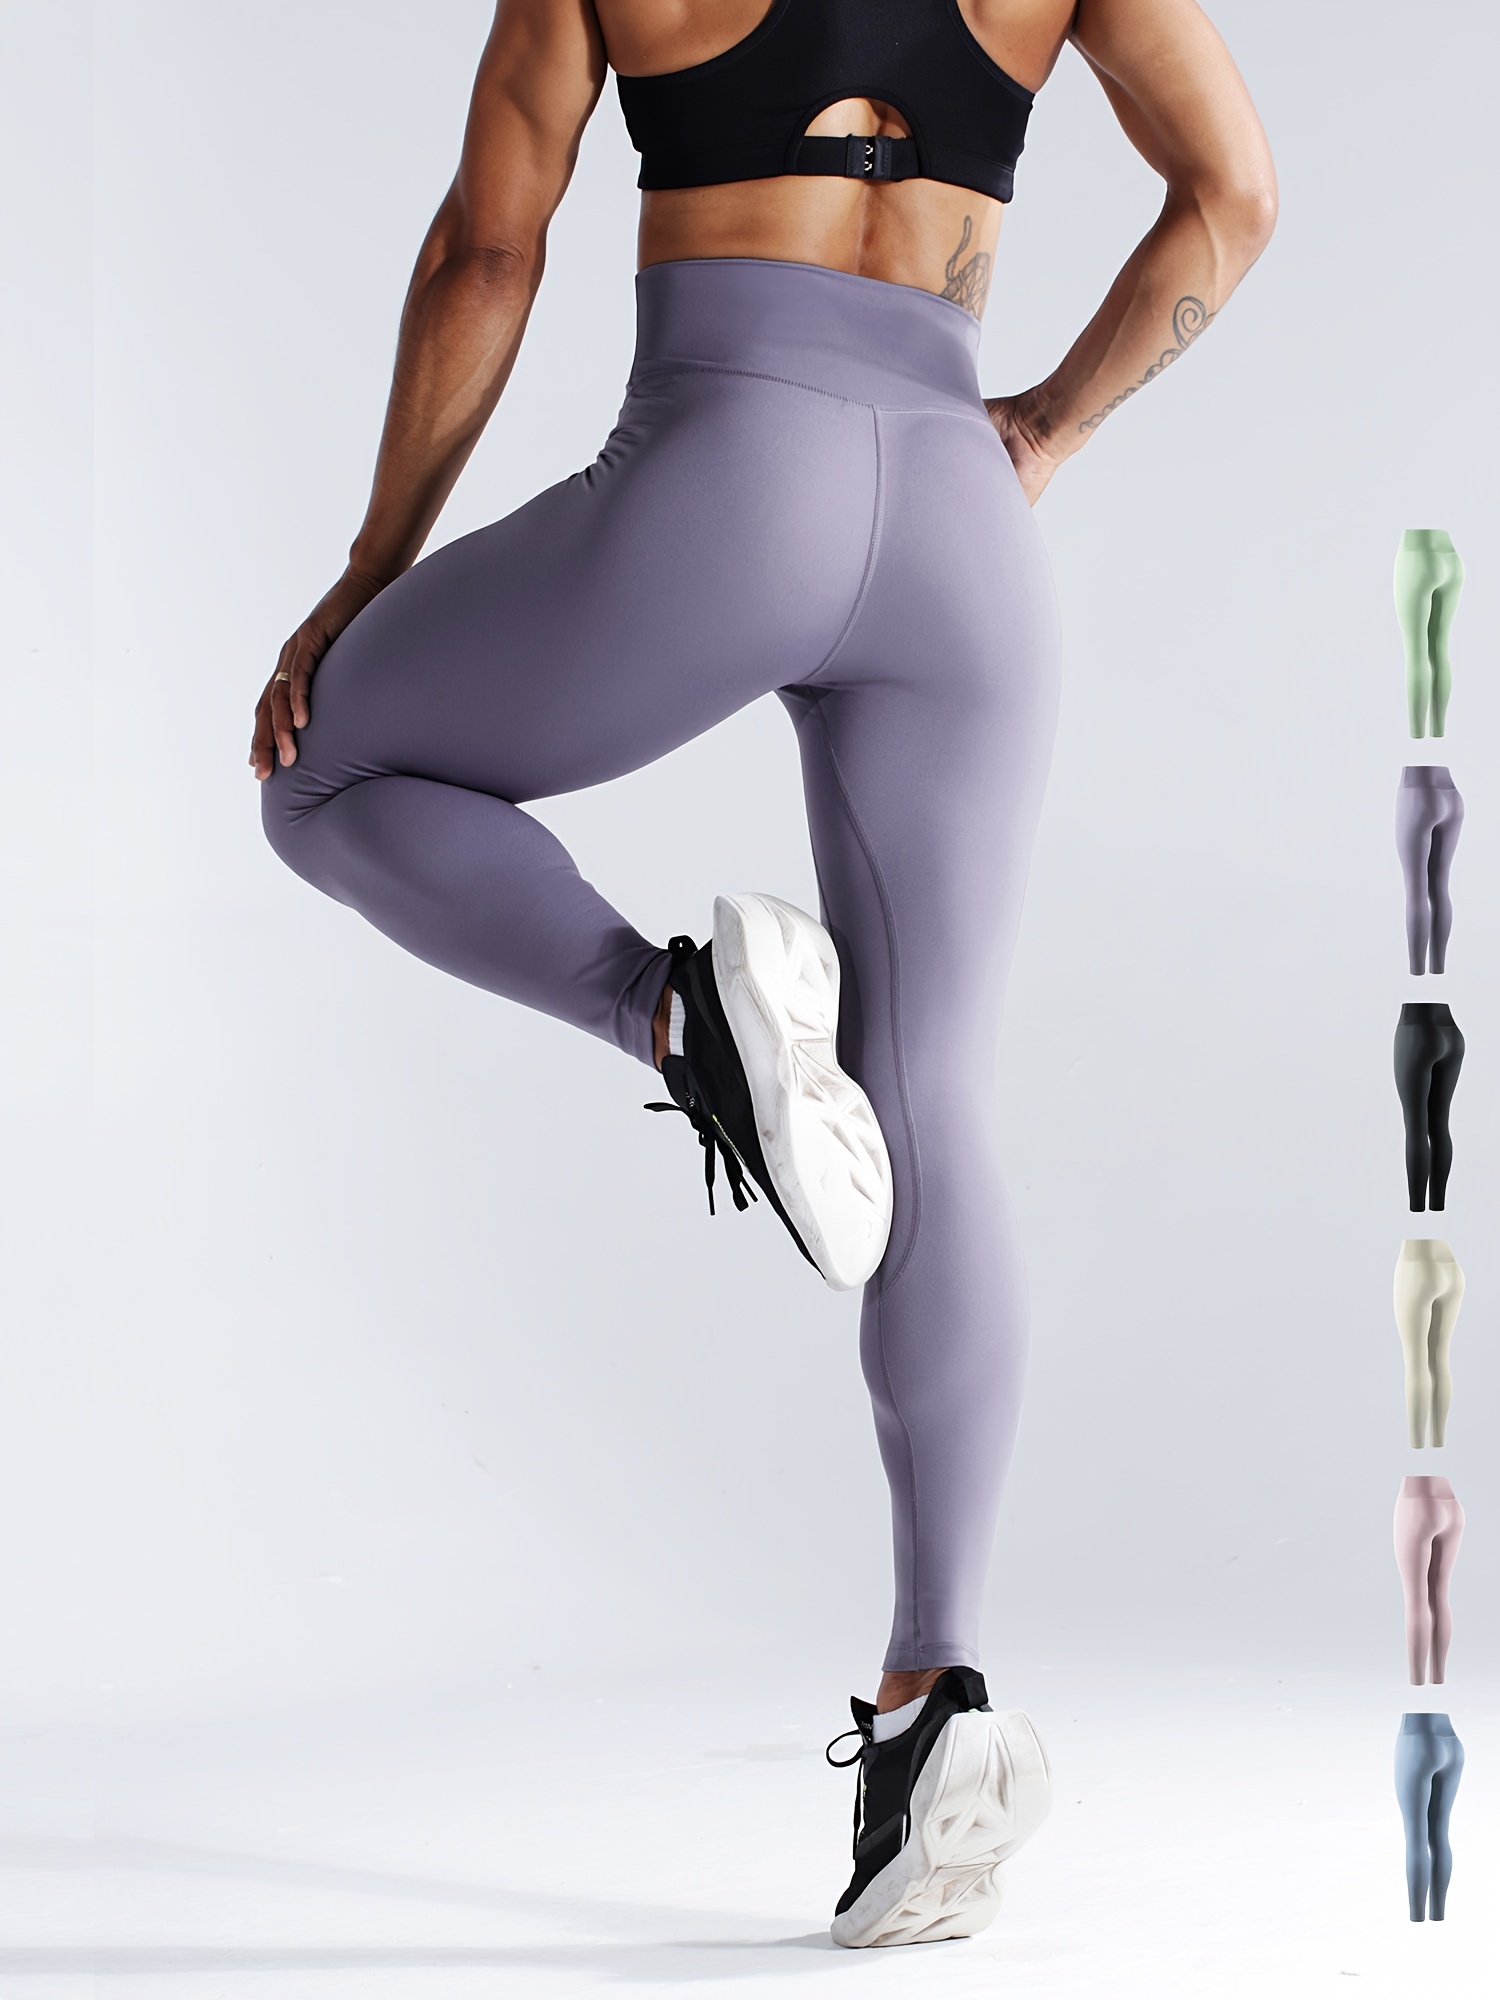 KBK Women's fashion 3D pattern hip tight yoga fitness running